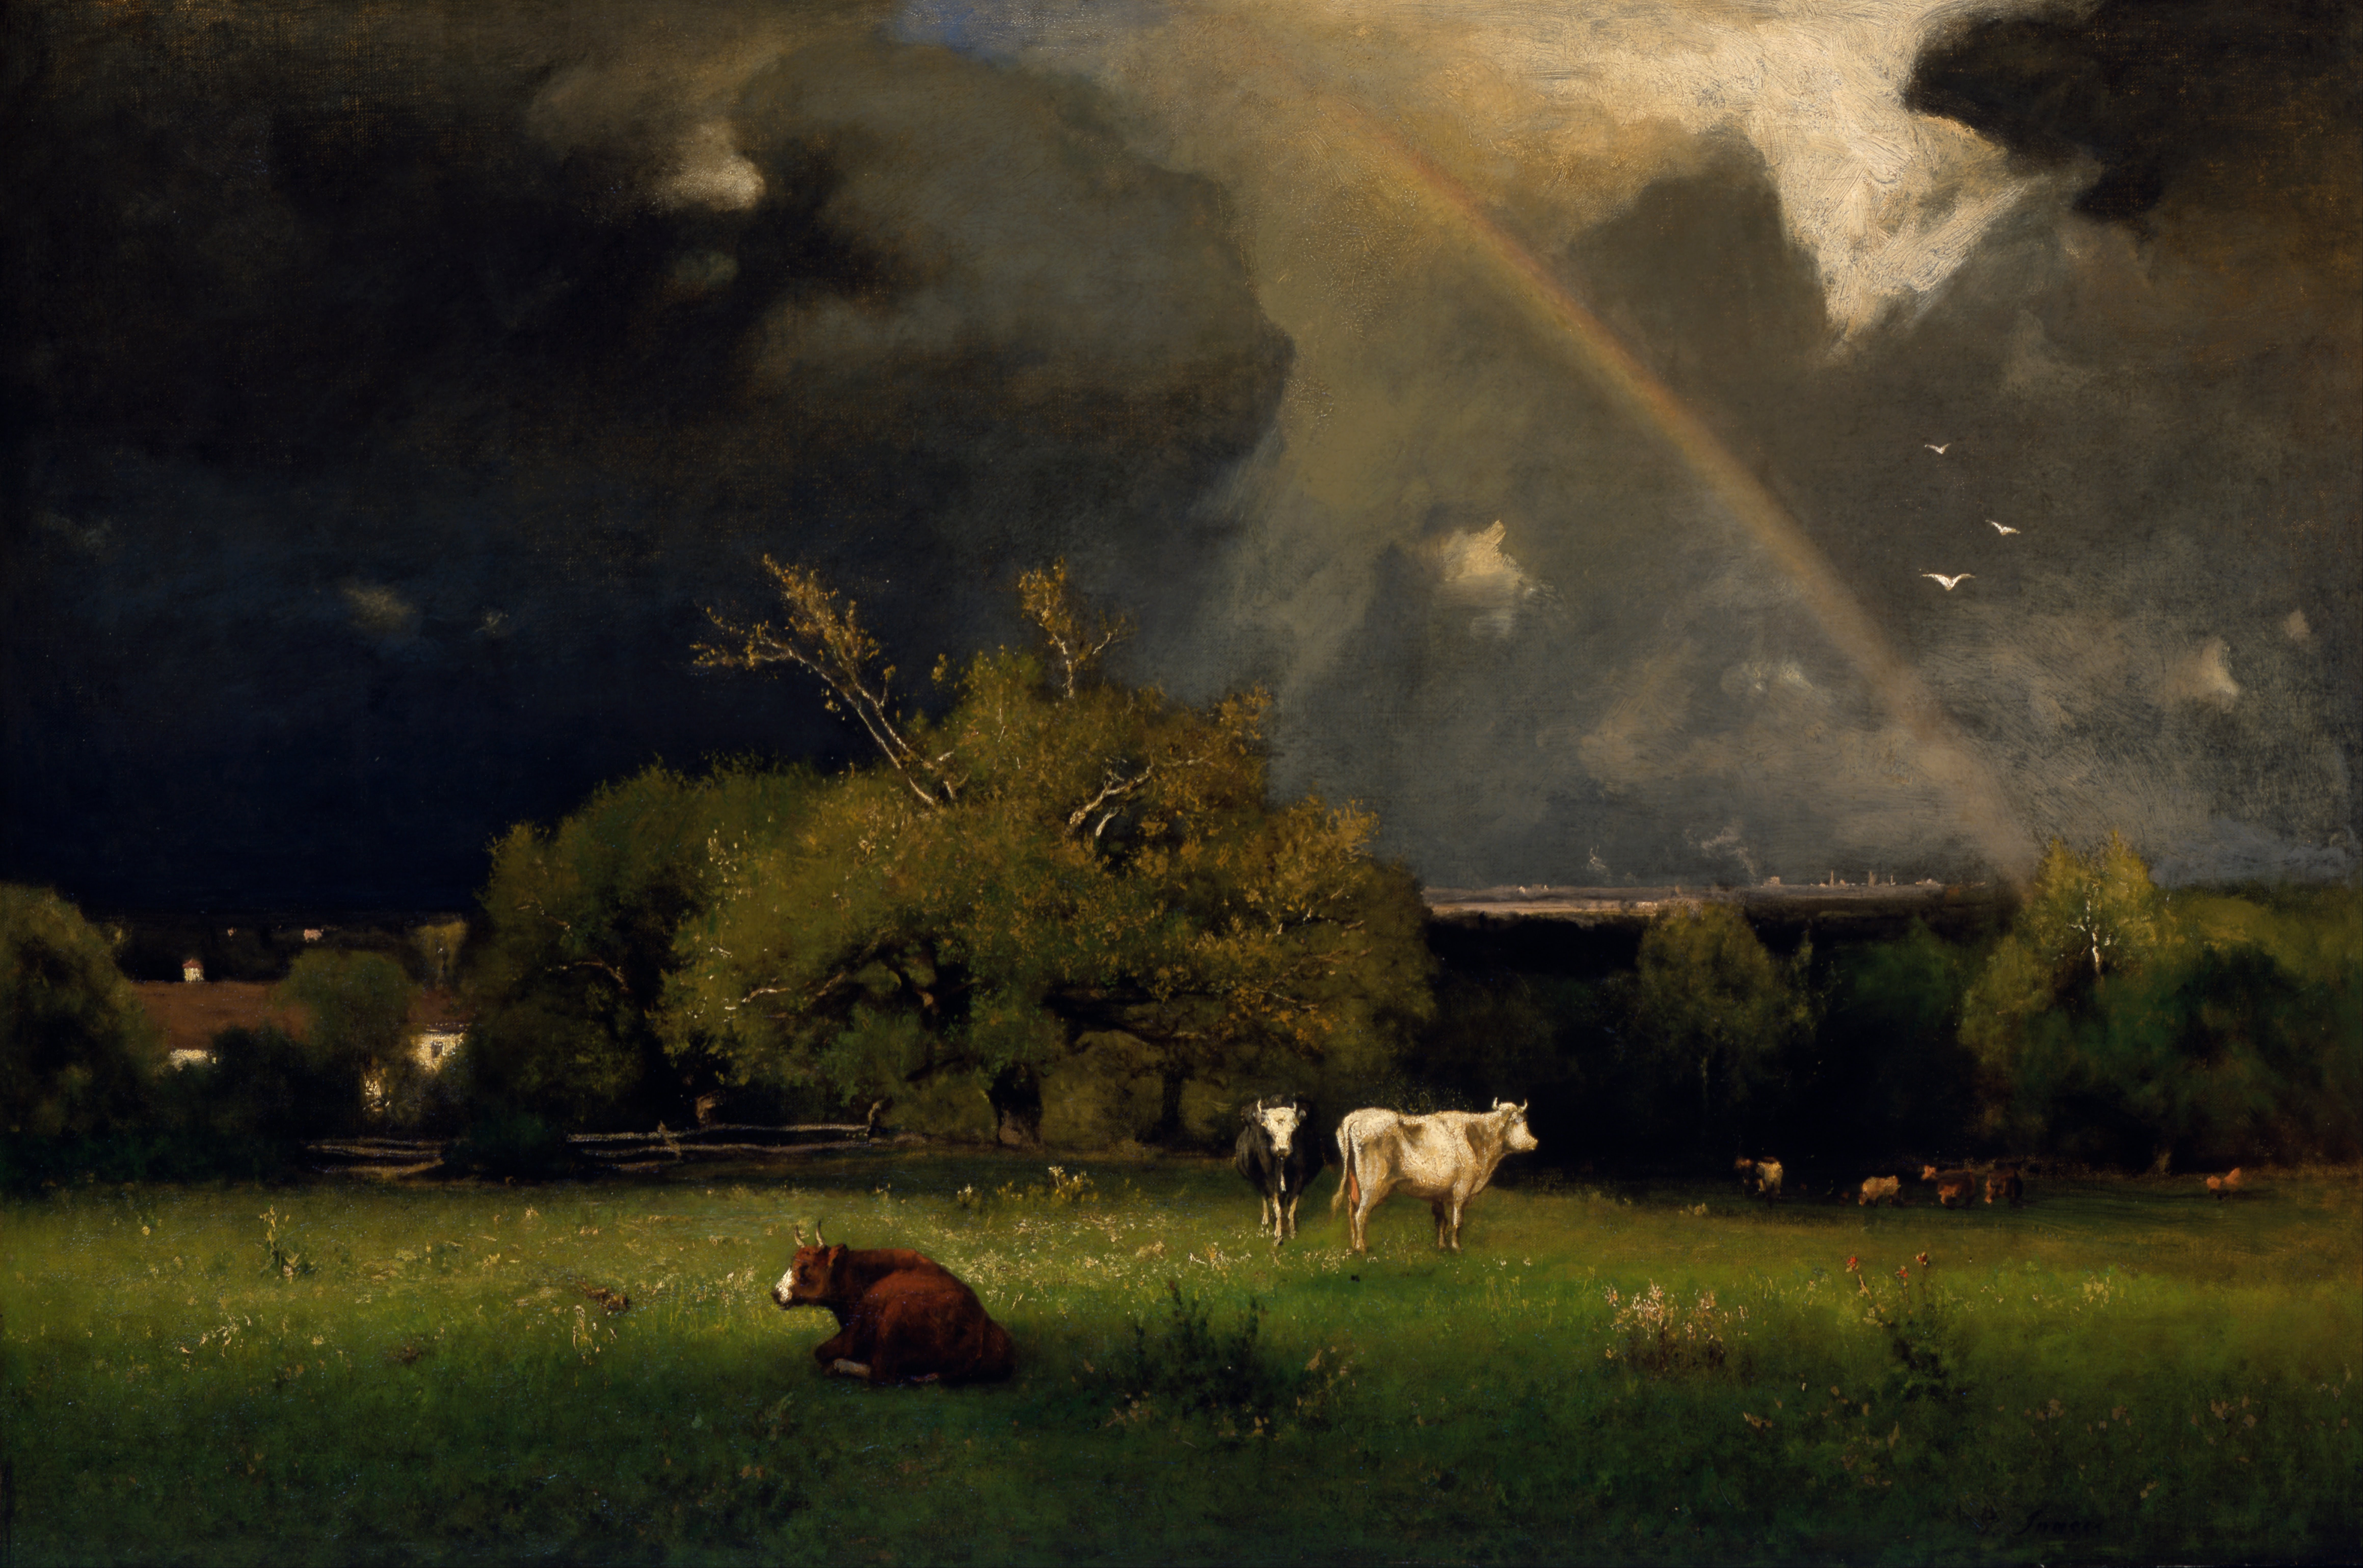 L'arcobaleno by George Inness - 1878-1879 circa - 76 x 114 cm 